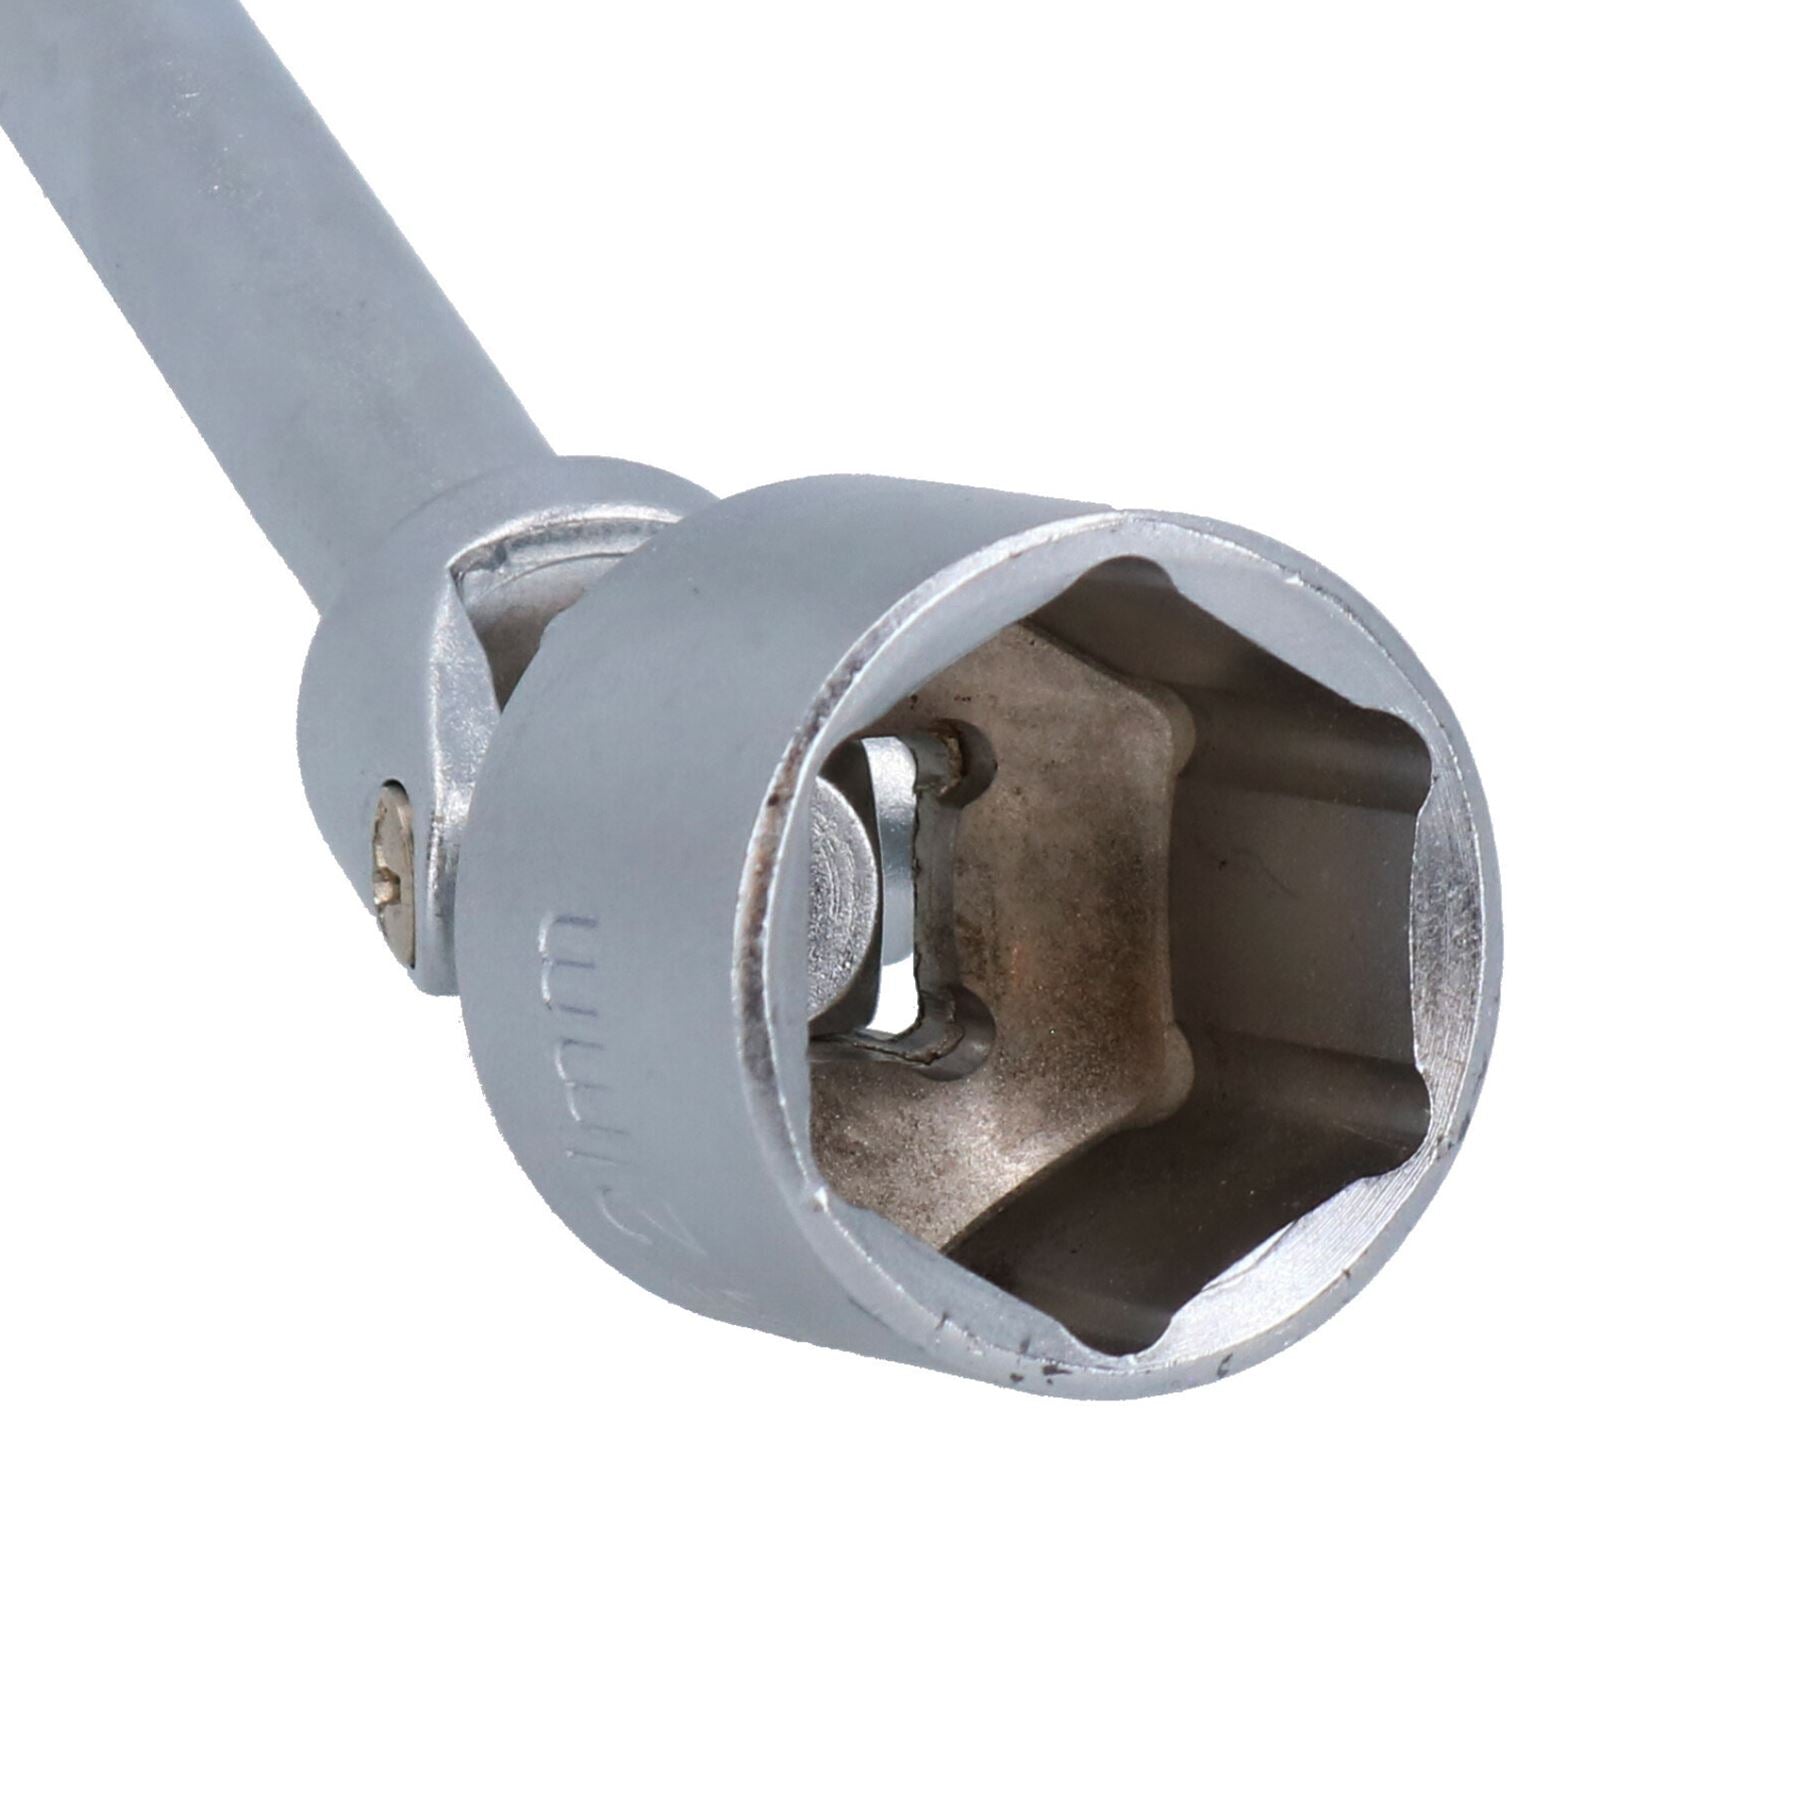 21mm Metric UJ Universal Joint T Bar Sockets Spanner Nut Spinner Wrench